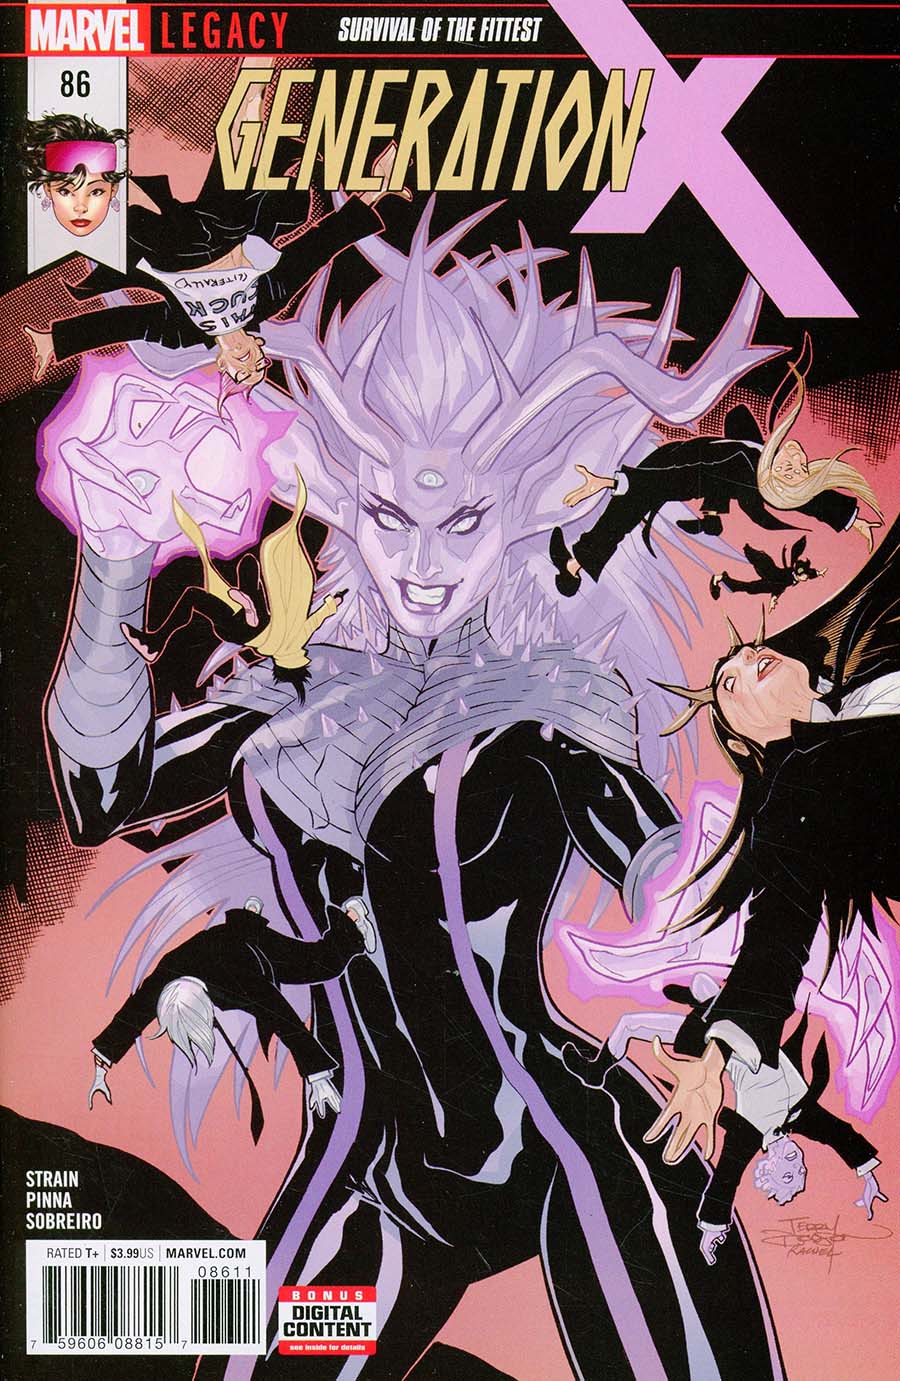 Generation X Vol 2 #86 (Marvel Legacy Tie-In)